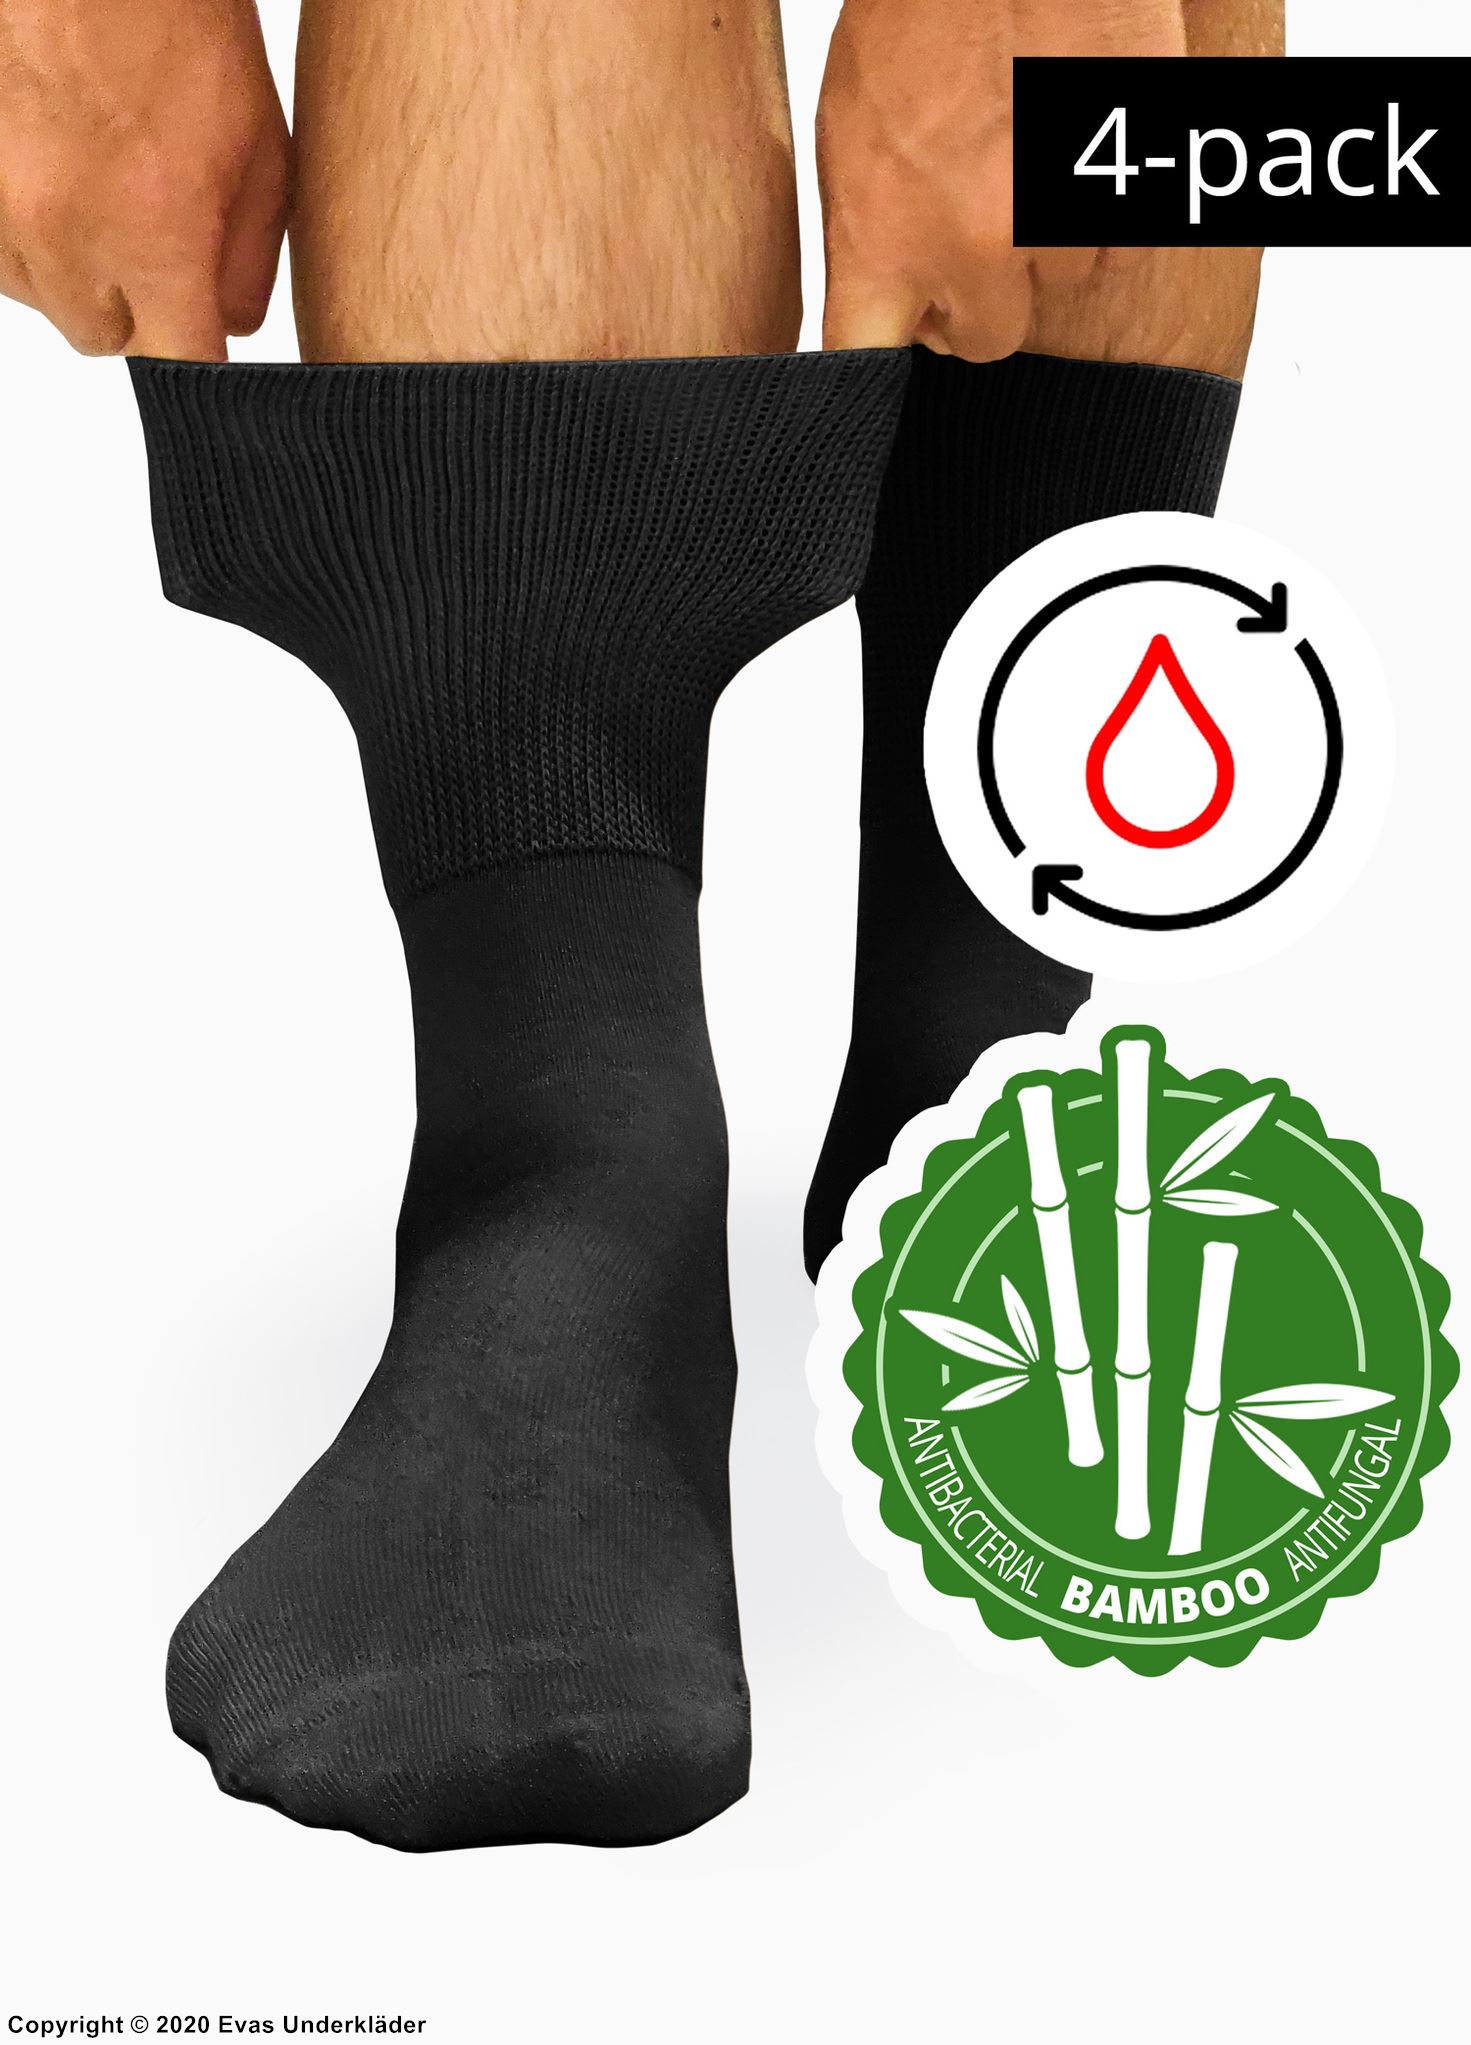 Comfort socks (unisex), bamboo (antibacterial, antifungal), gentle cuffs, 4-pack